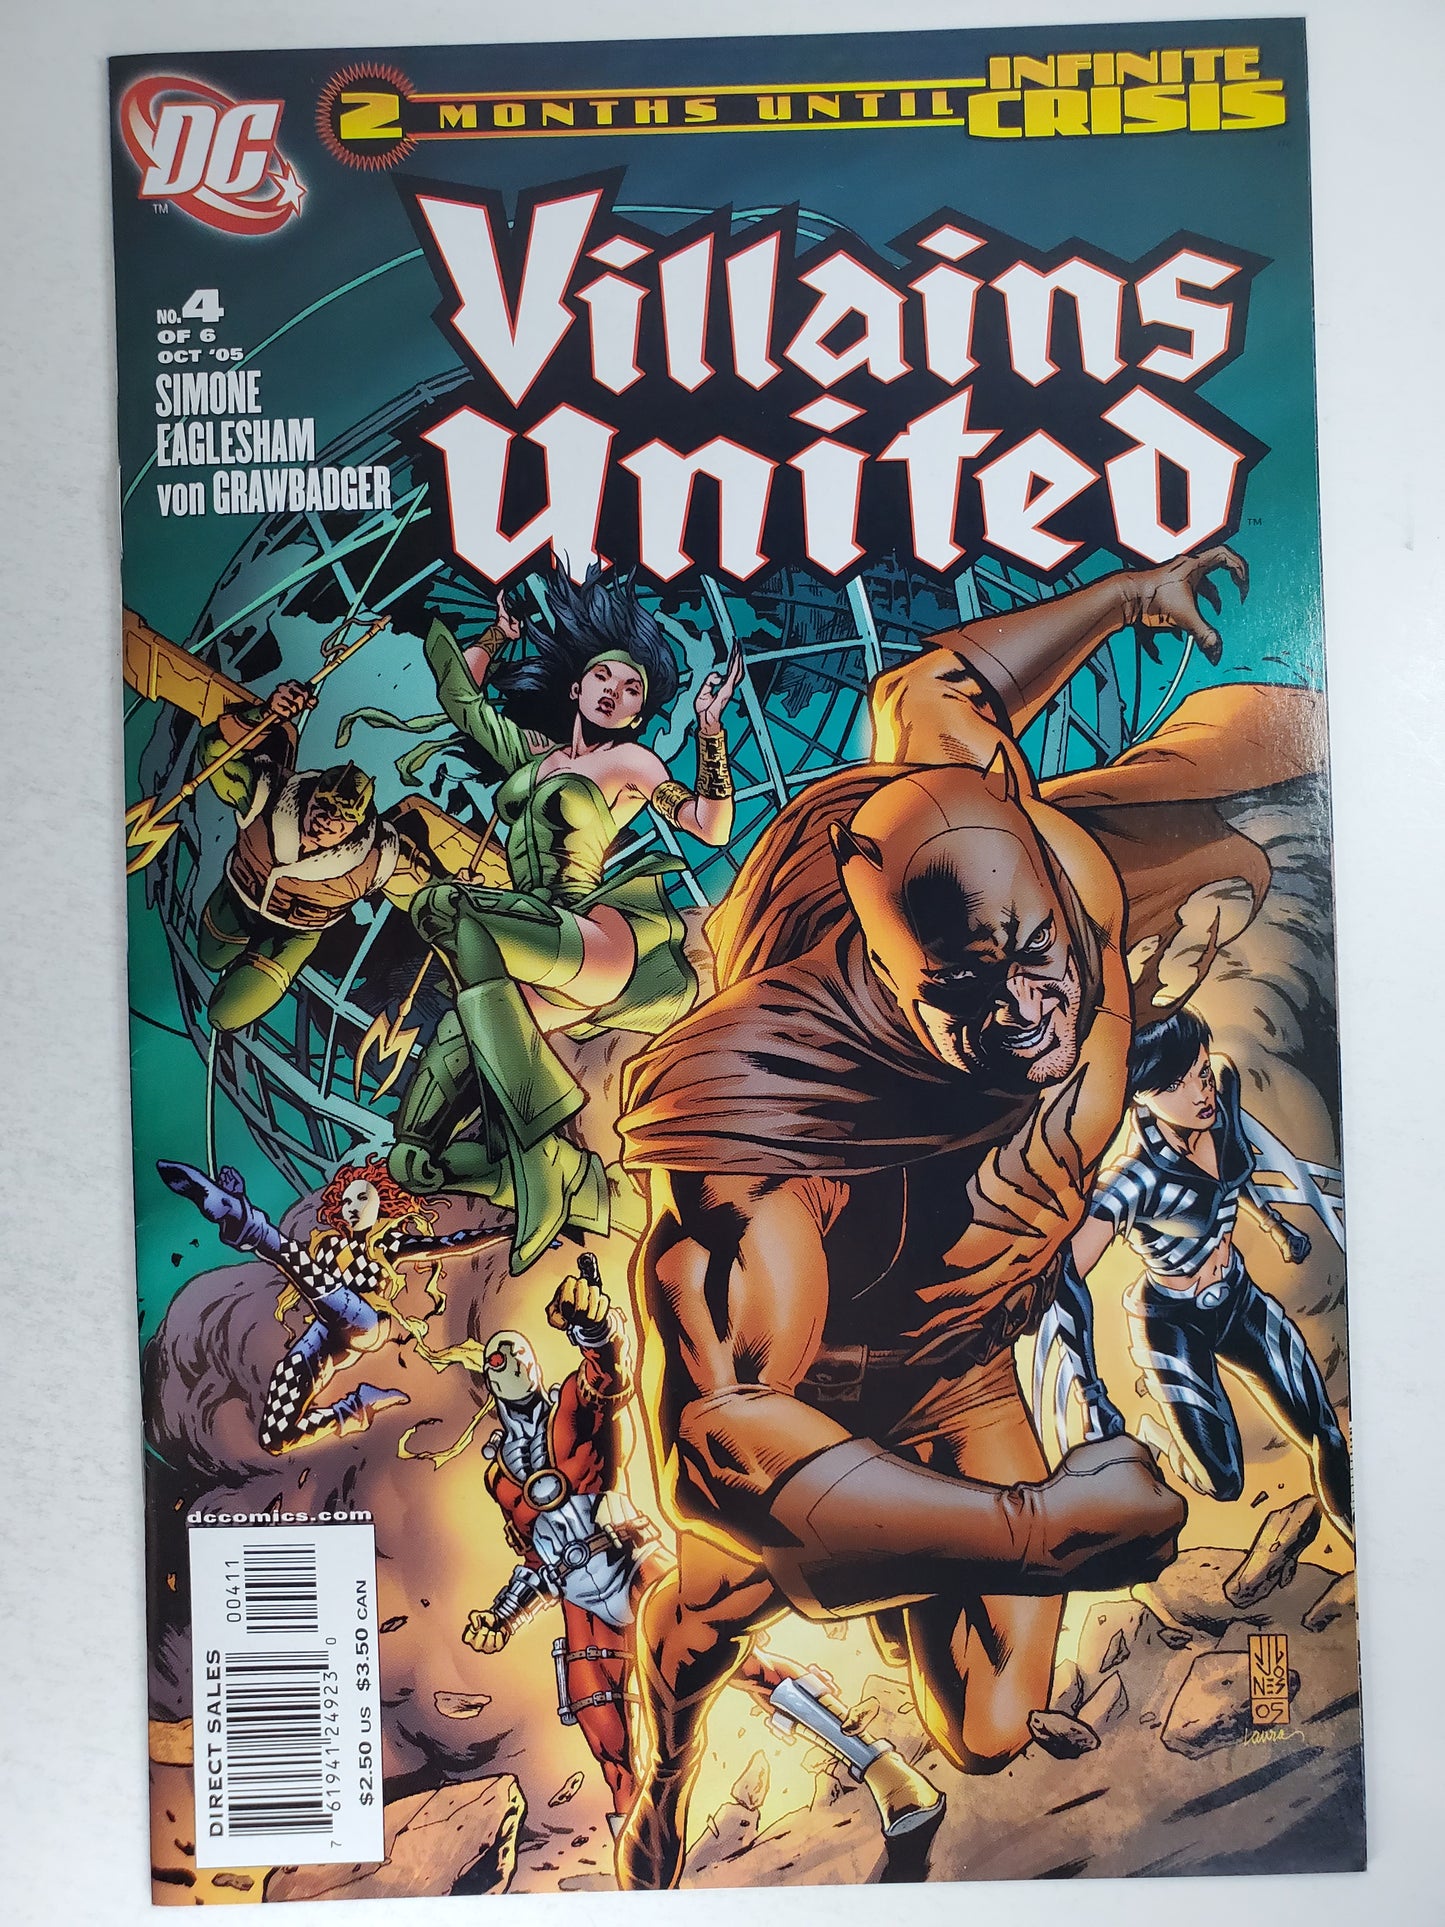 DC Villains United Vol 1 #1-6 SET Key